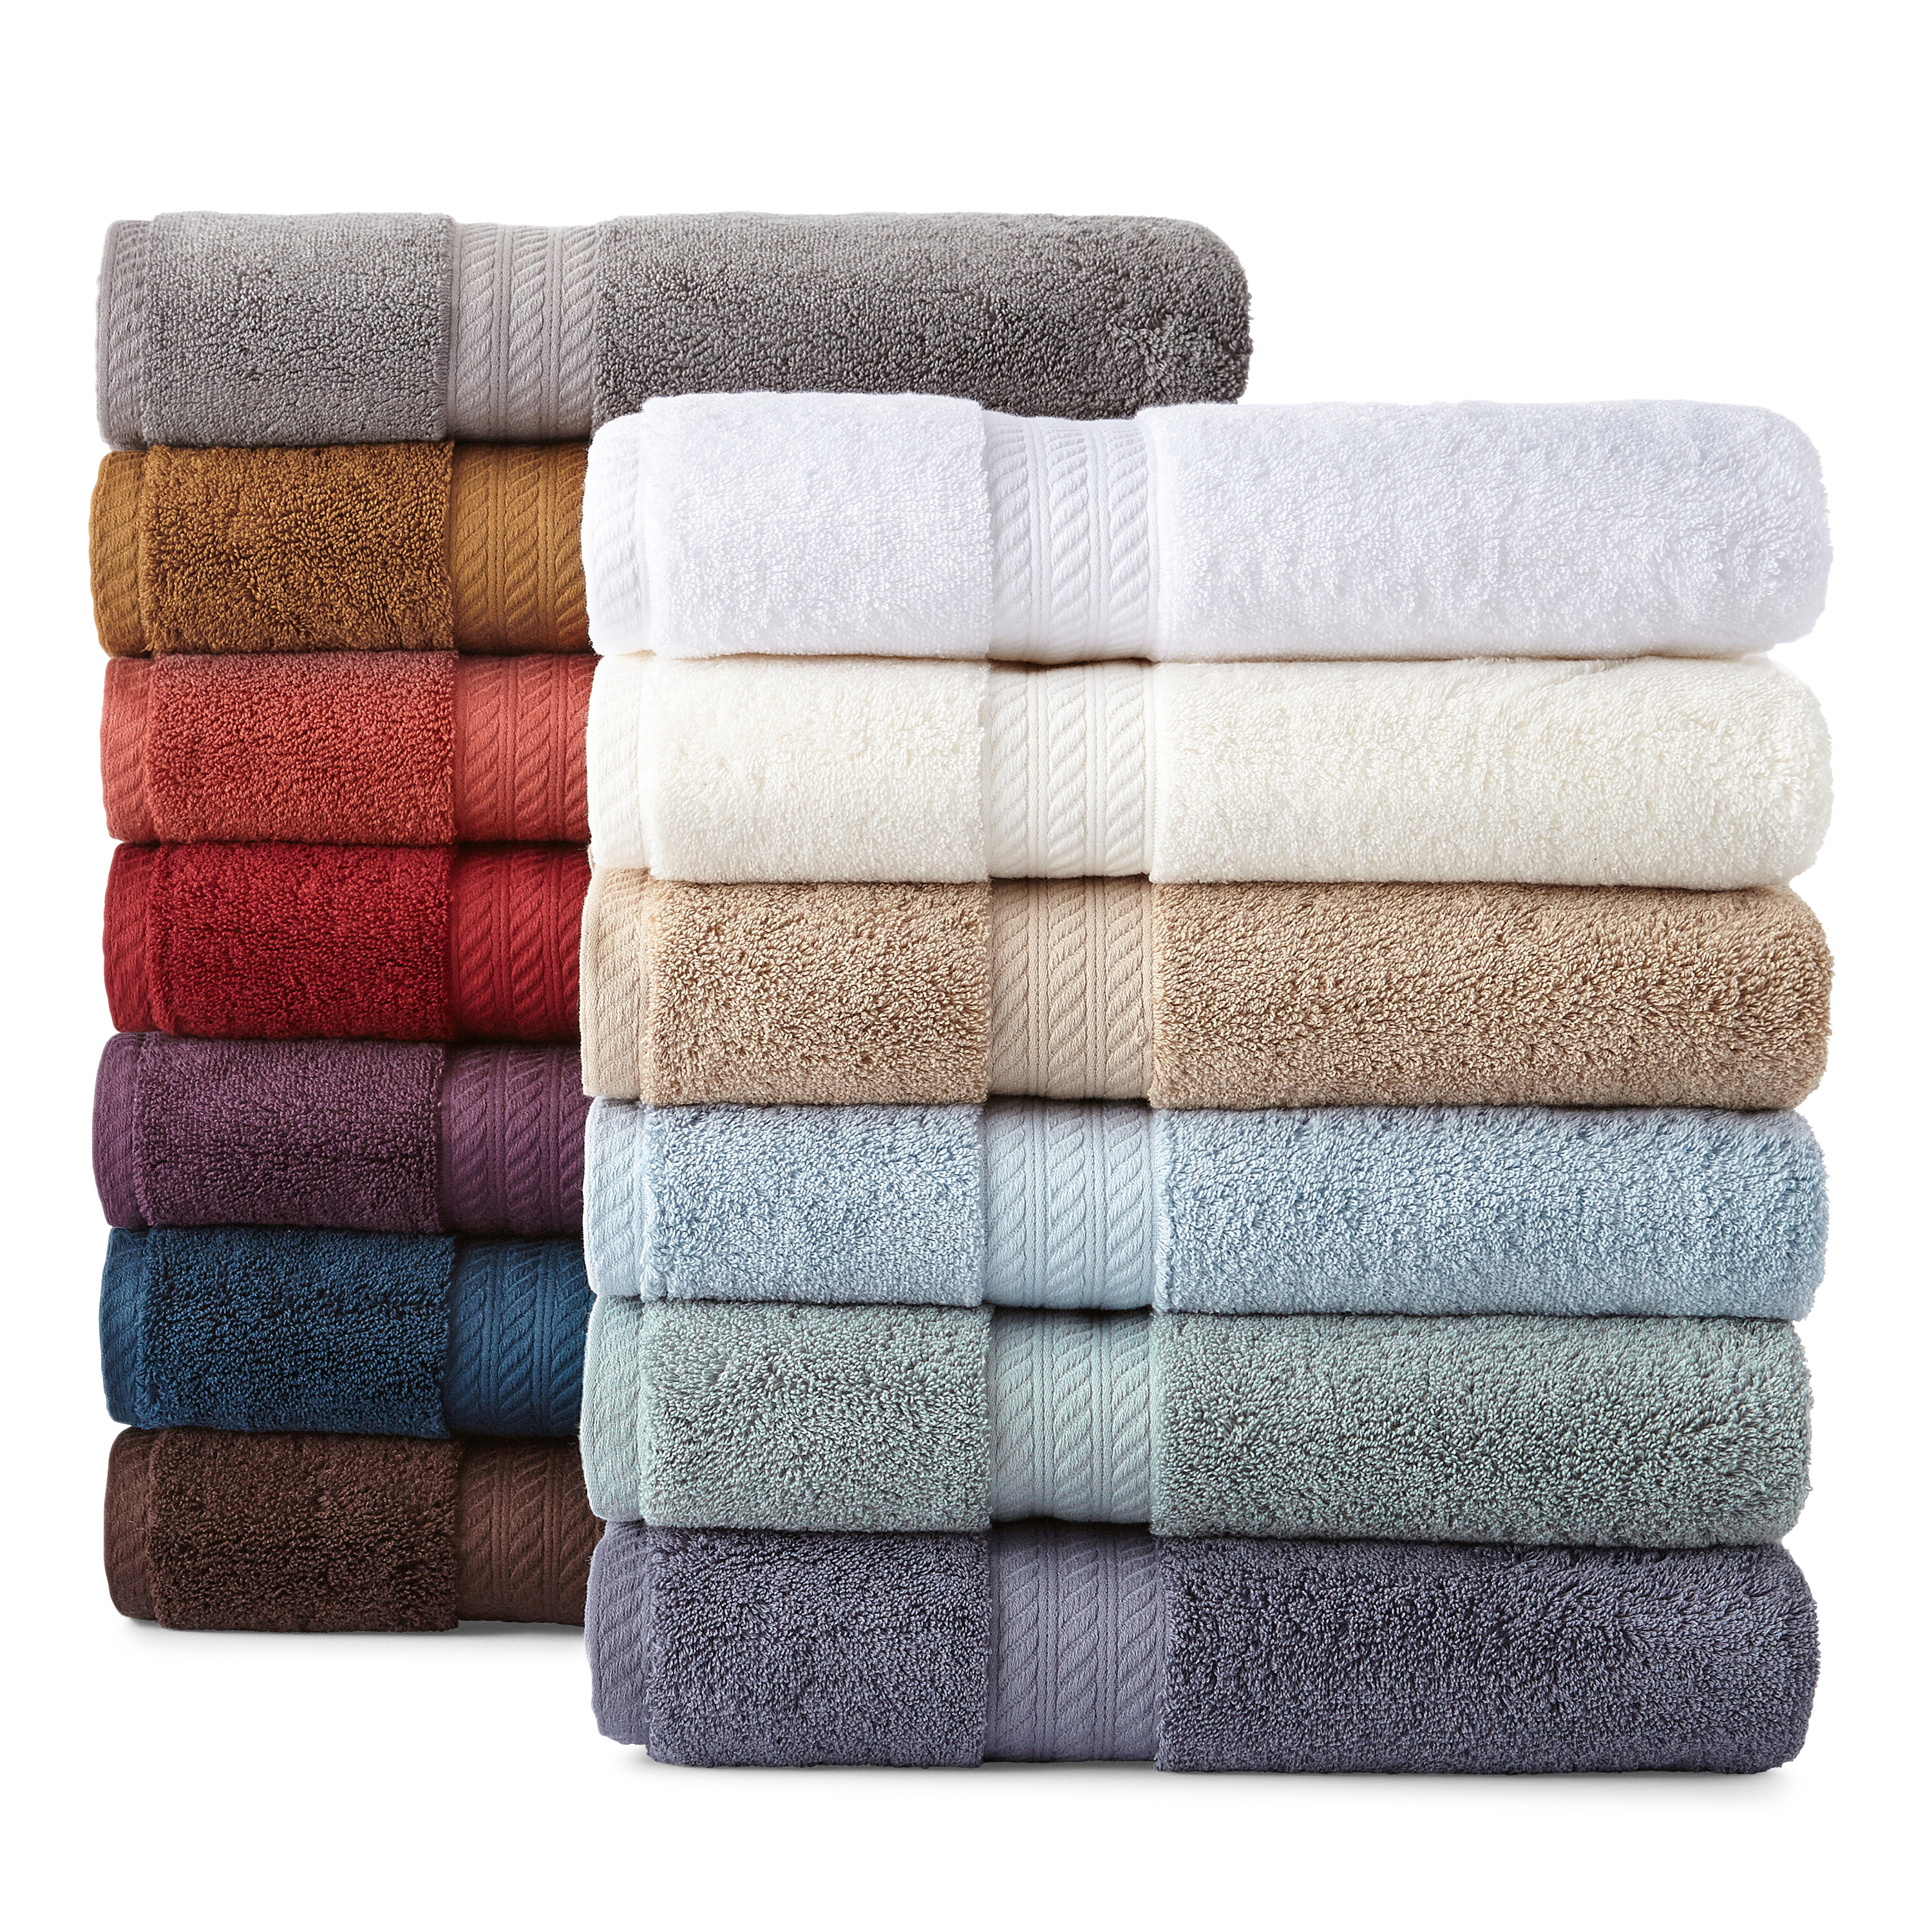 https://eprretailnews.com/wp-content/uploads/2016/10/JCPenney-to-offer-refund-for-Royal-Velvet%C2%AE-Egyptian-cotton-towels-and-damask-stripe-comforter-set.jpg